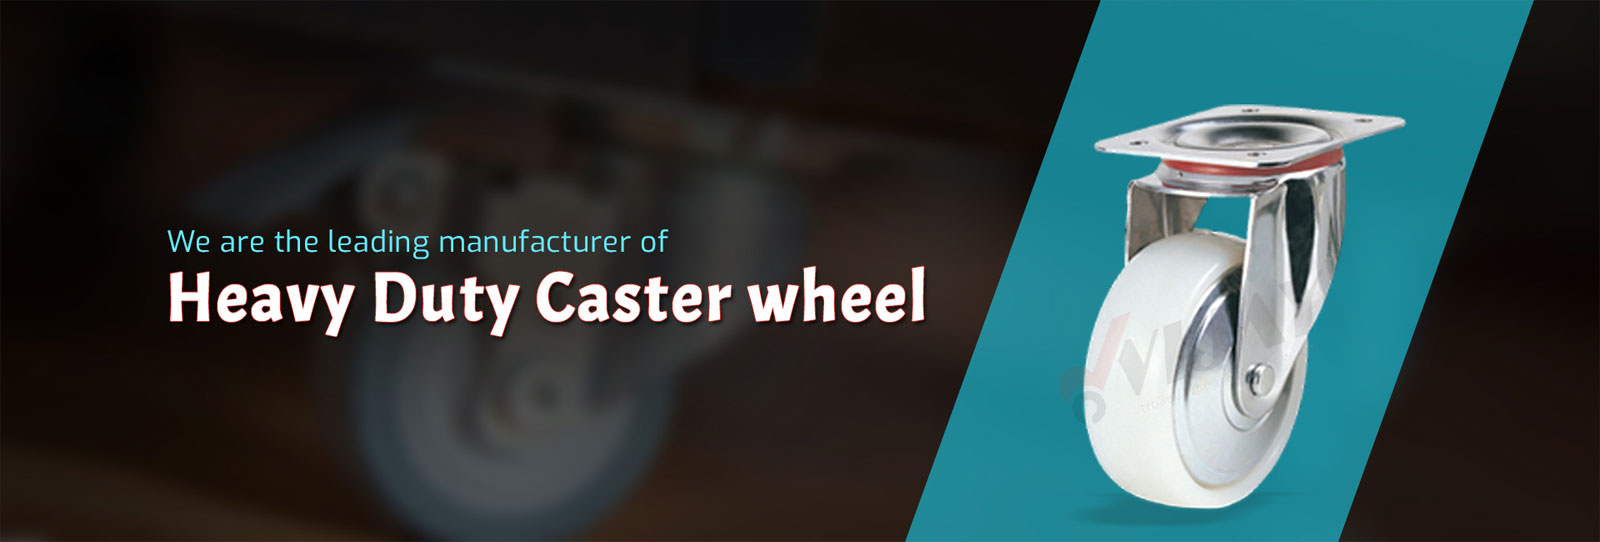 Caster Wheel Supplier